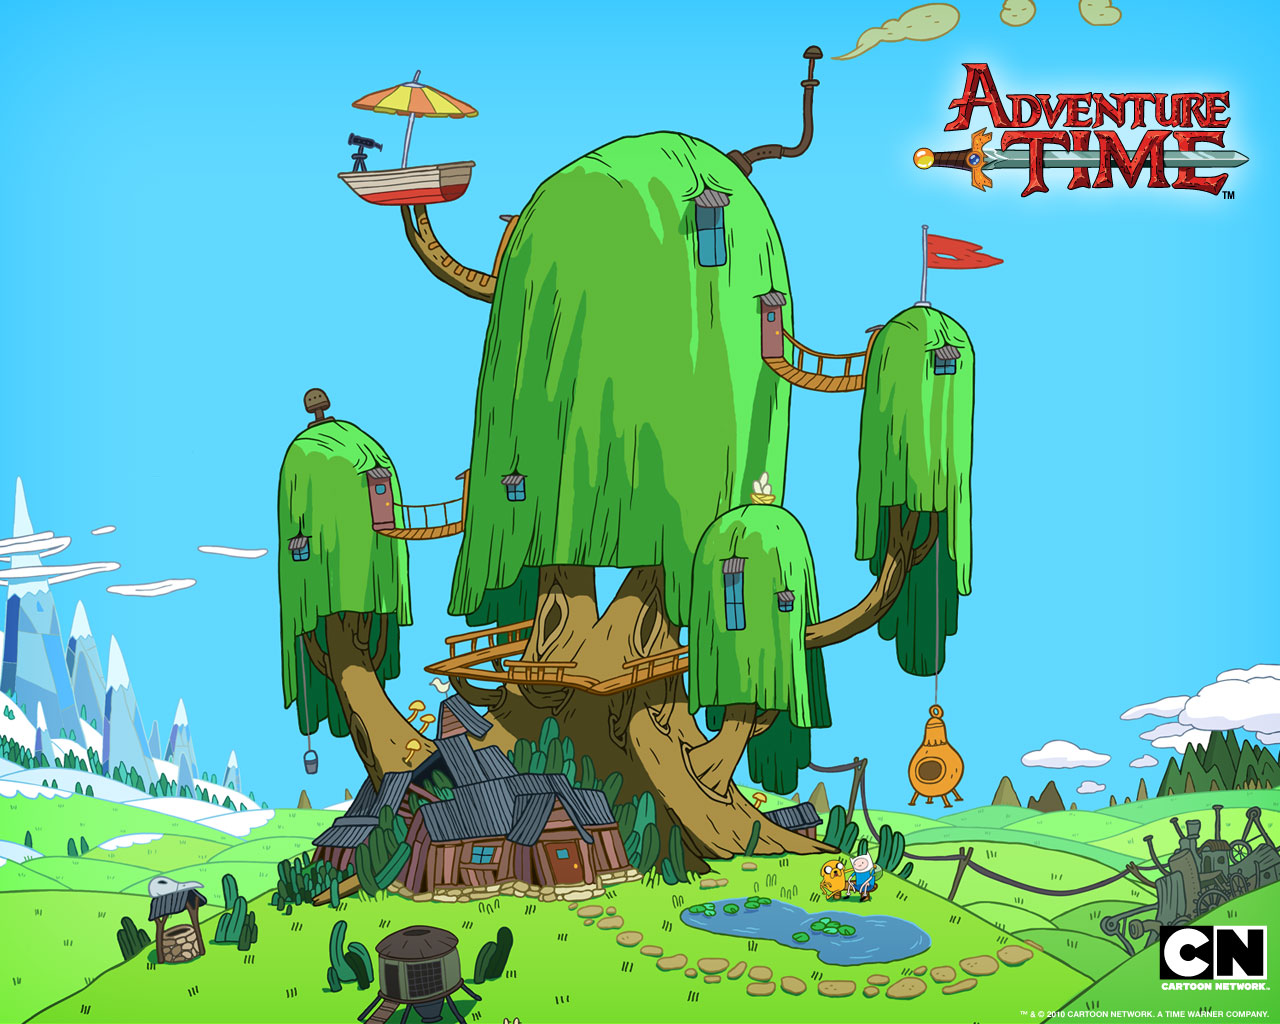 Download High quality kinopoisk.ru Adventure Time with Finn 26 2338 3B Jake 2040778 w 1280 Adventure Time with Finn & Jake wallpaper / 1280x1024